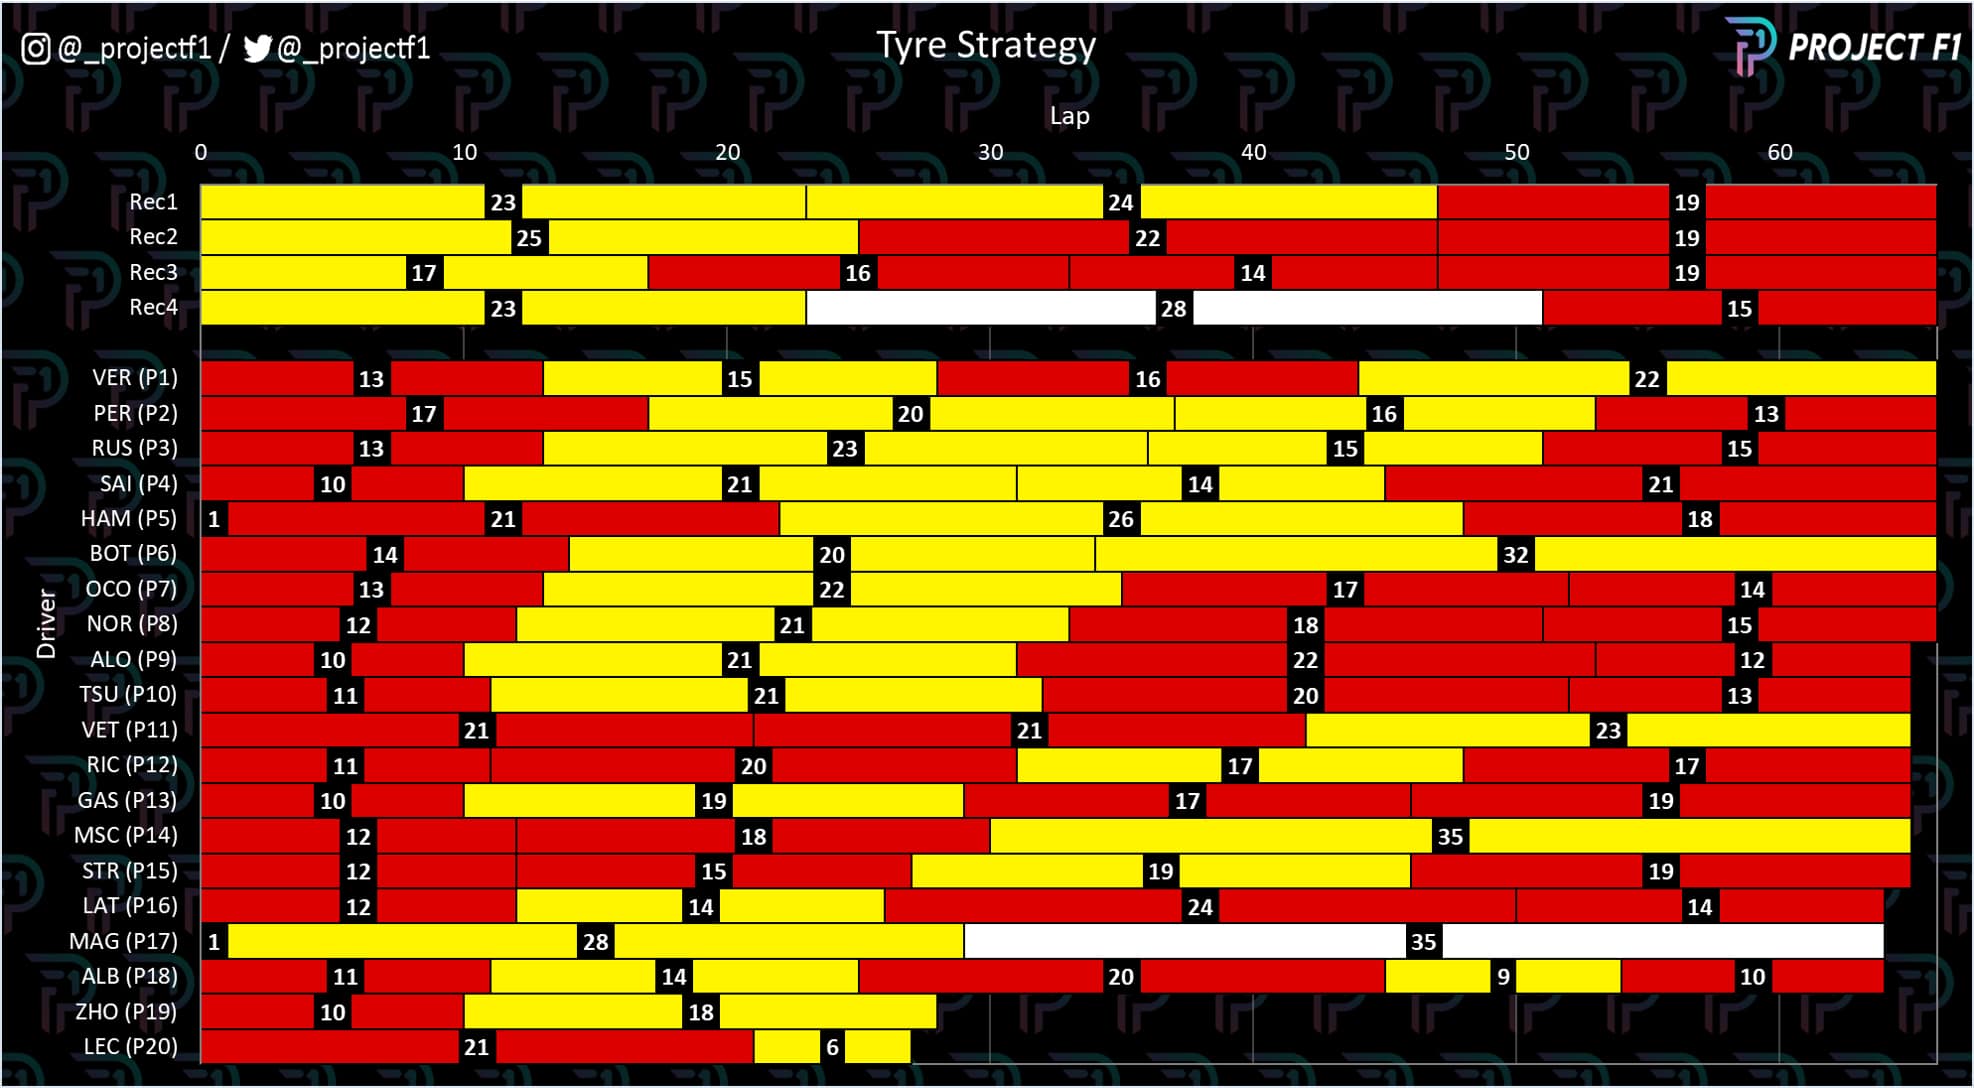 Spanish GP tyre strategy graph